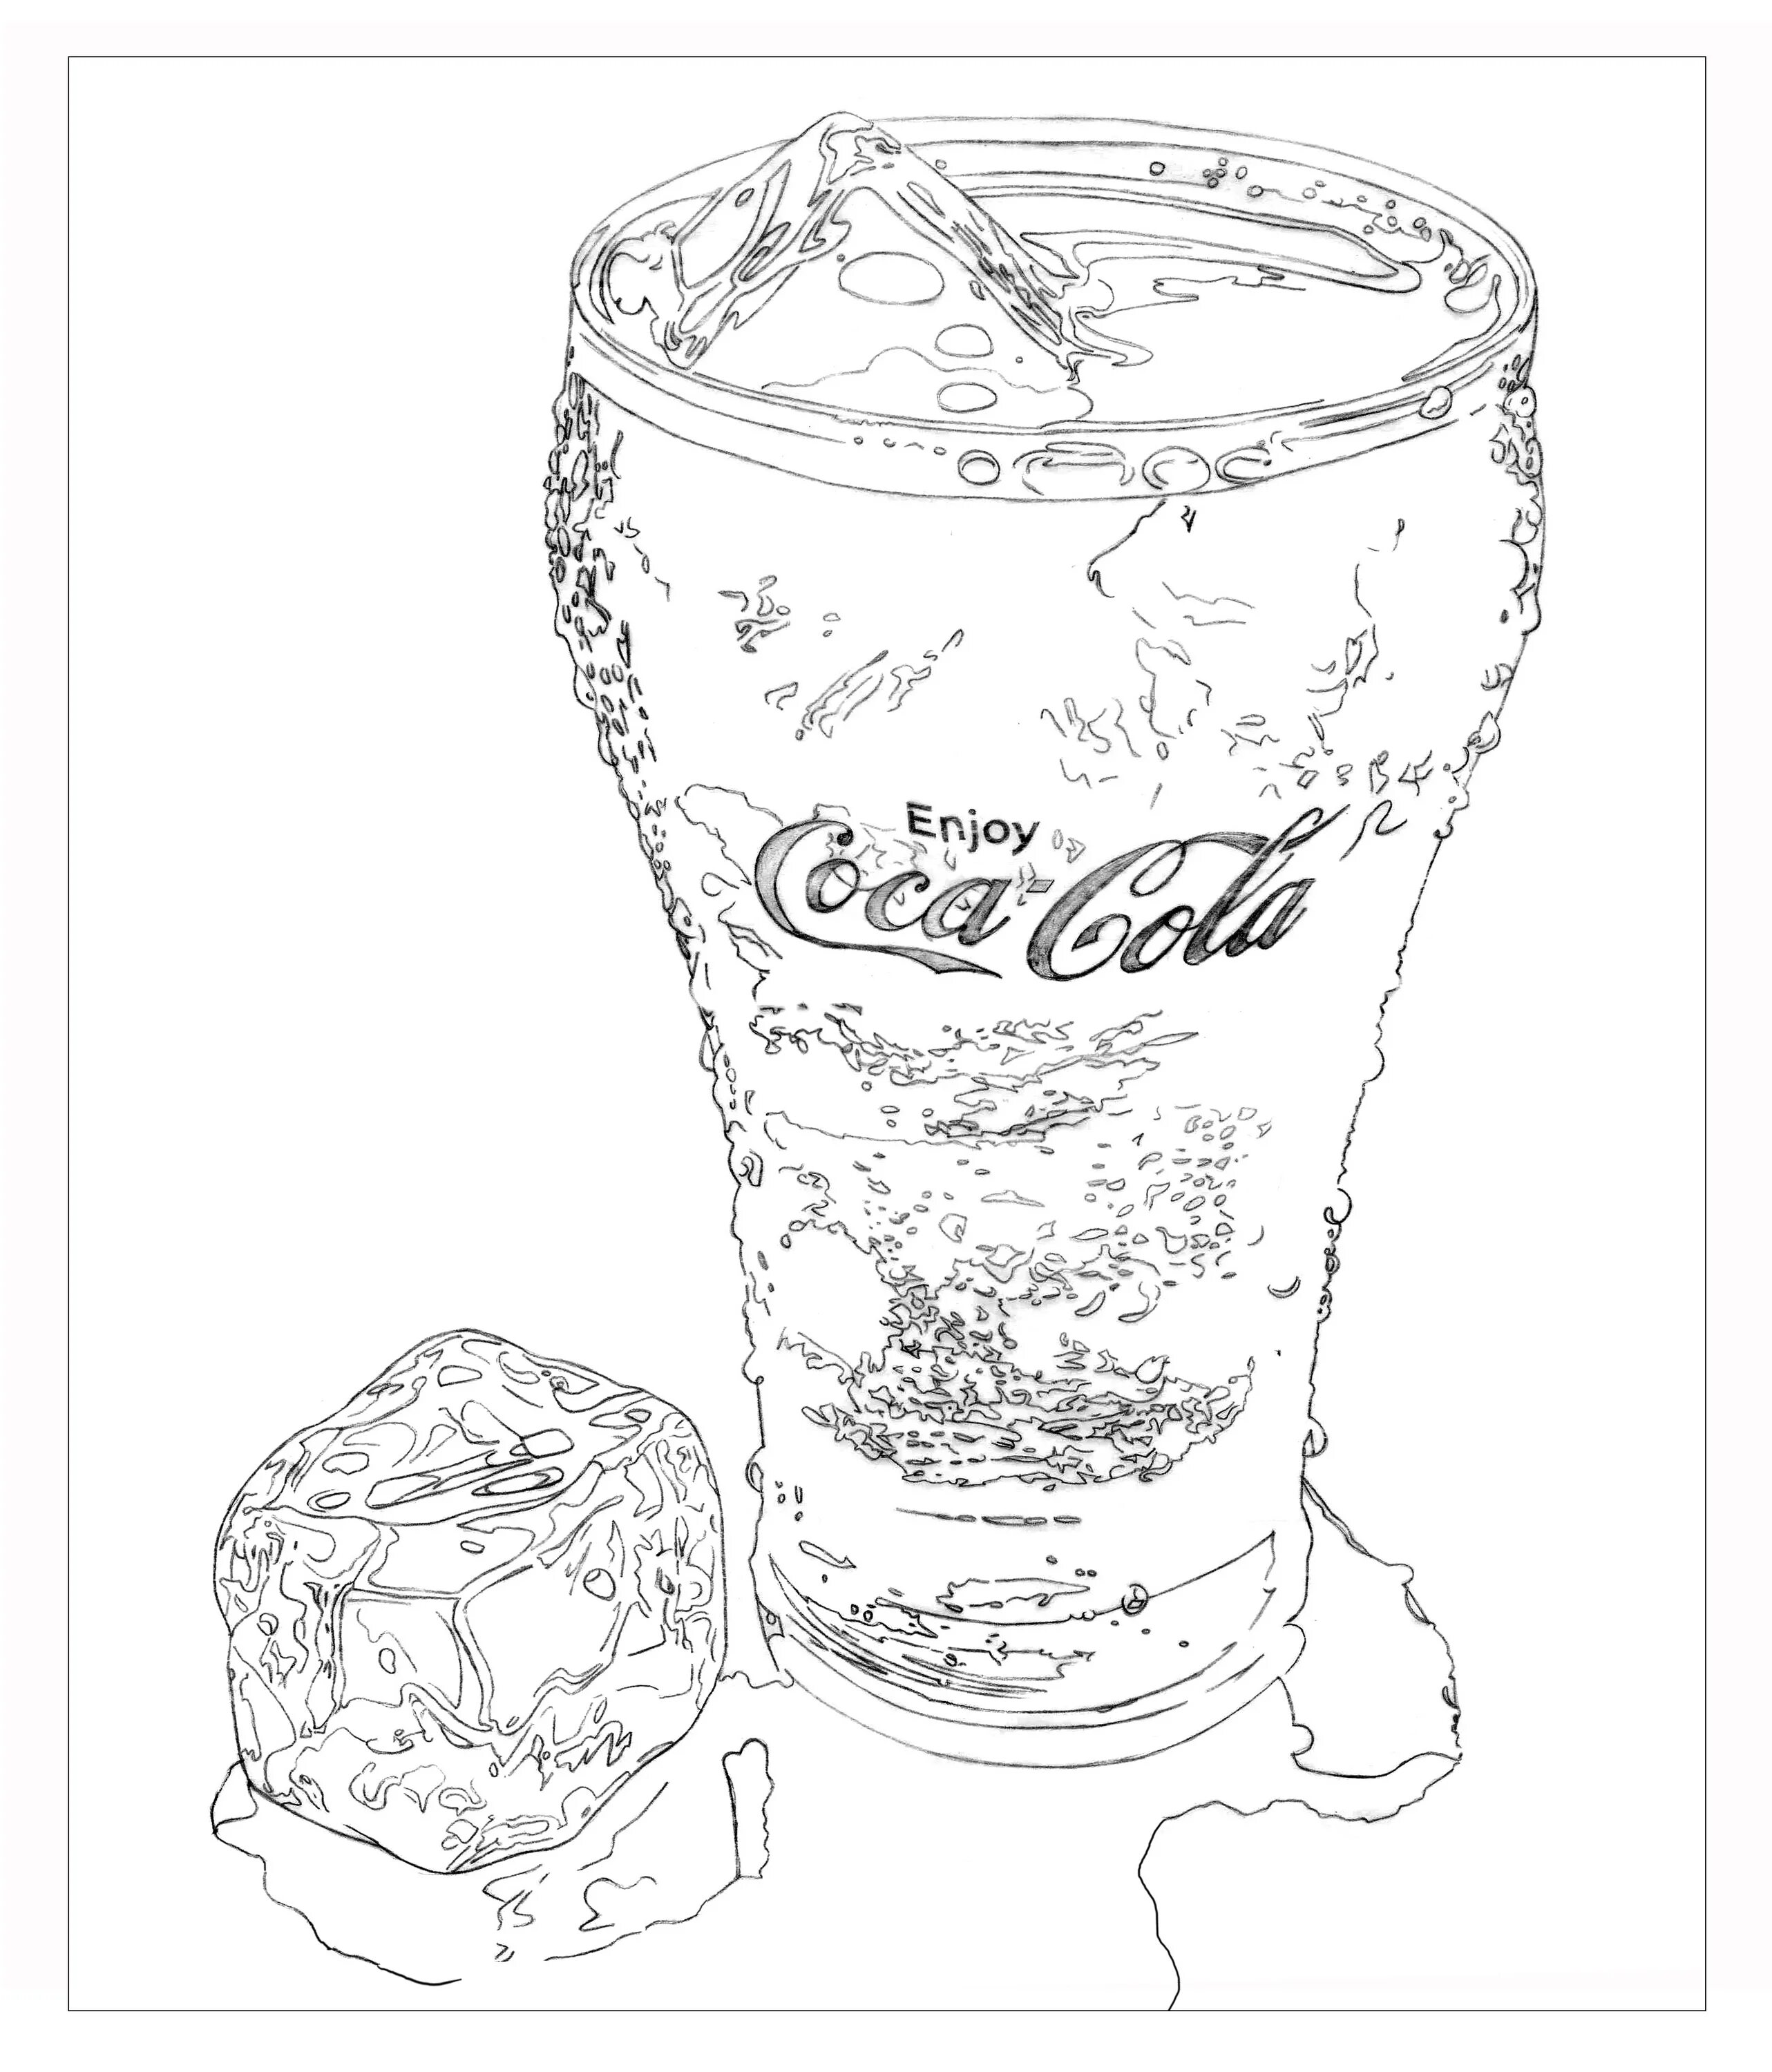 Coca cola #1